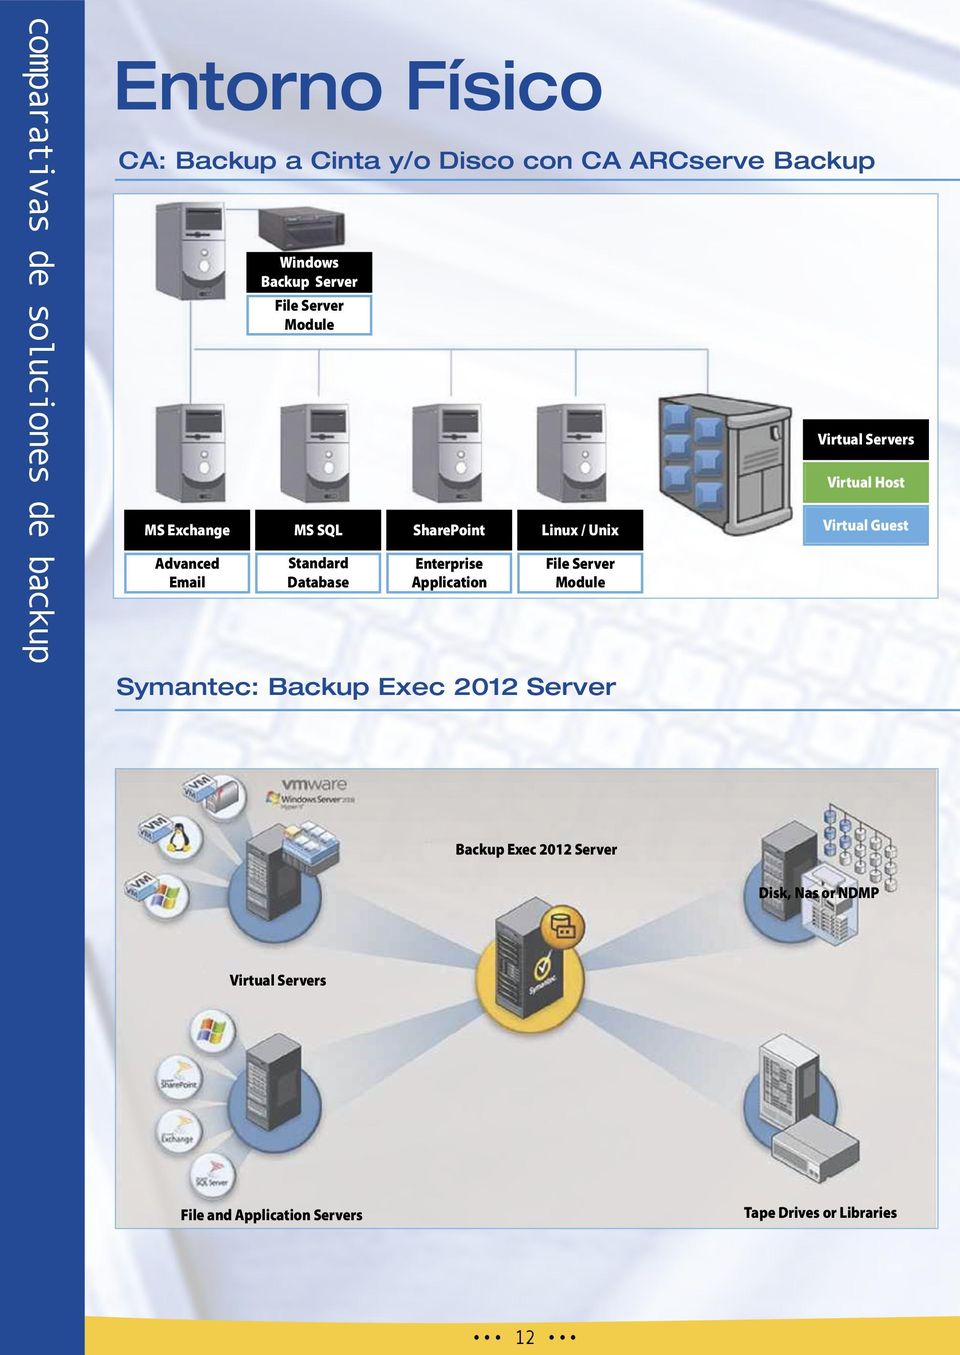 Application Linux / Unix File Server Module Symantec: Backup Exec 2012 Server Virtual Servers Virtual Host